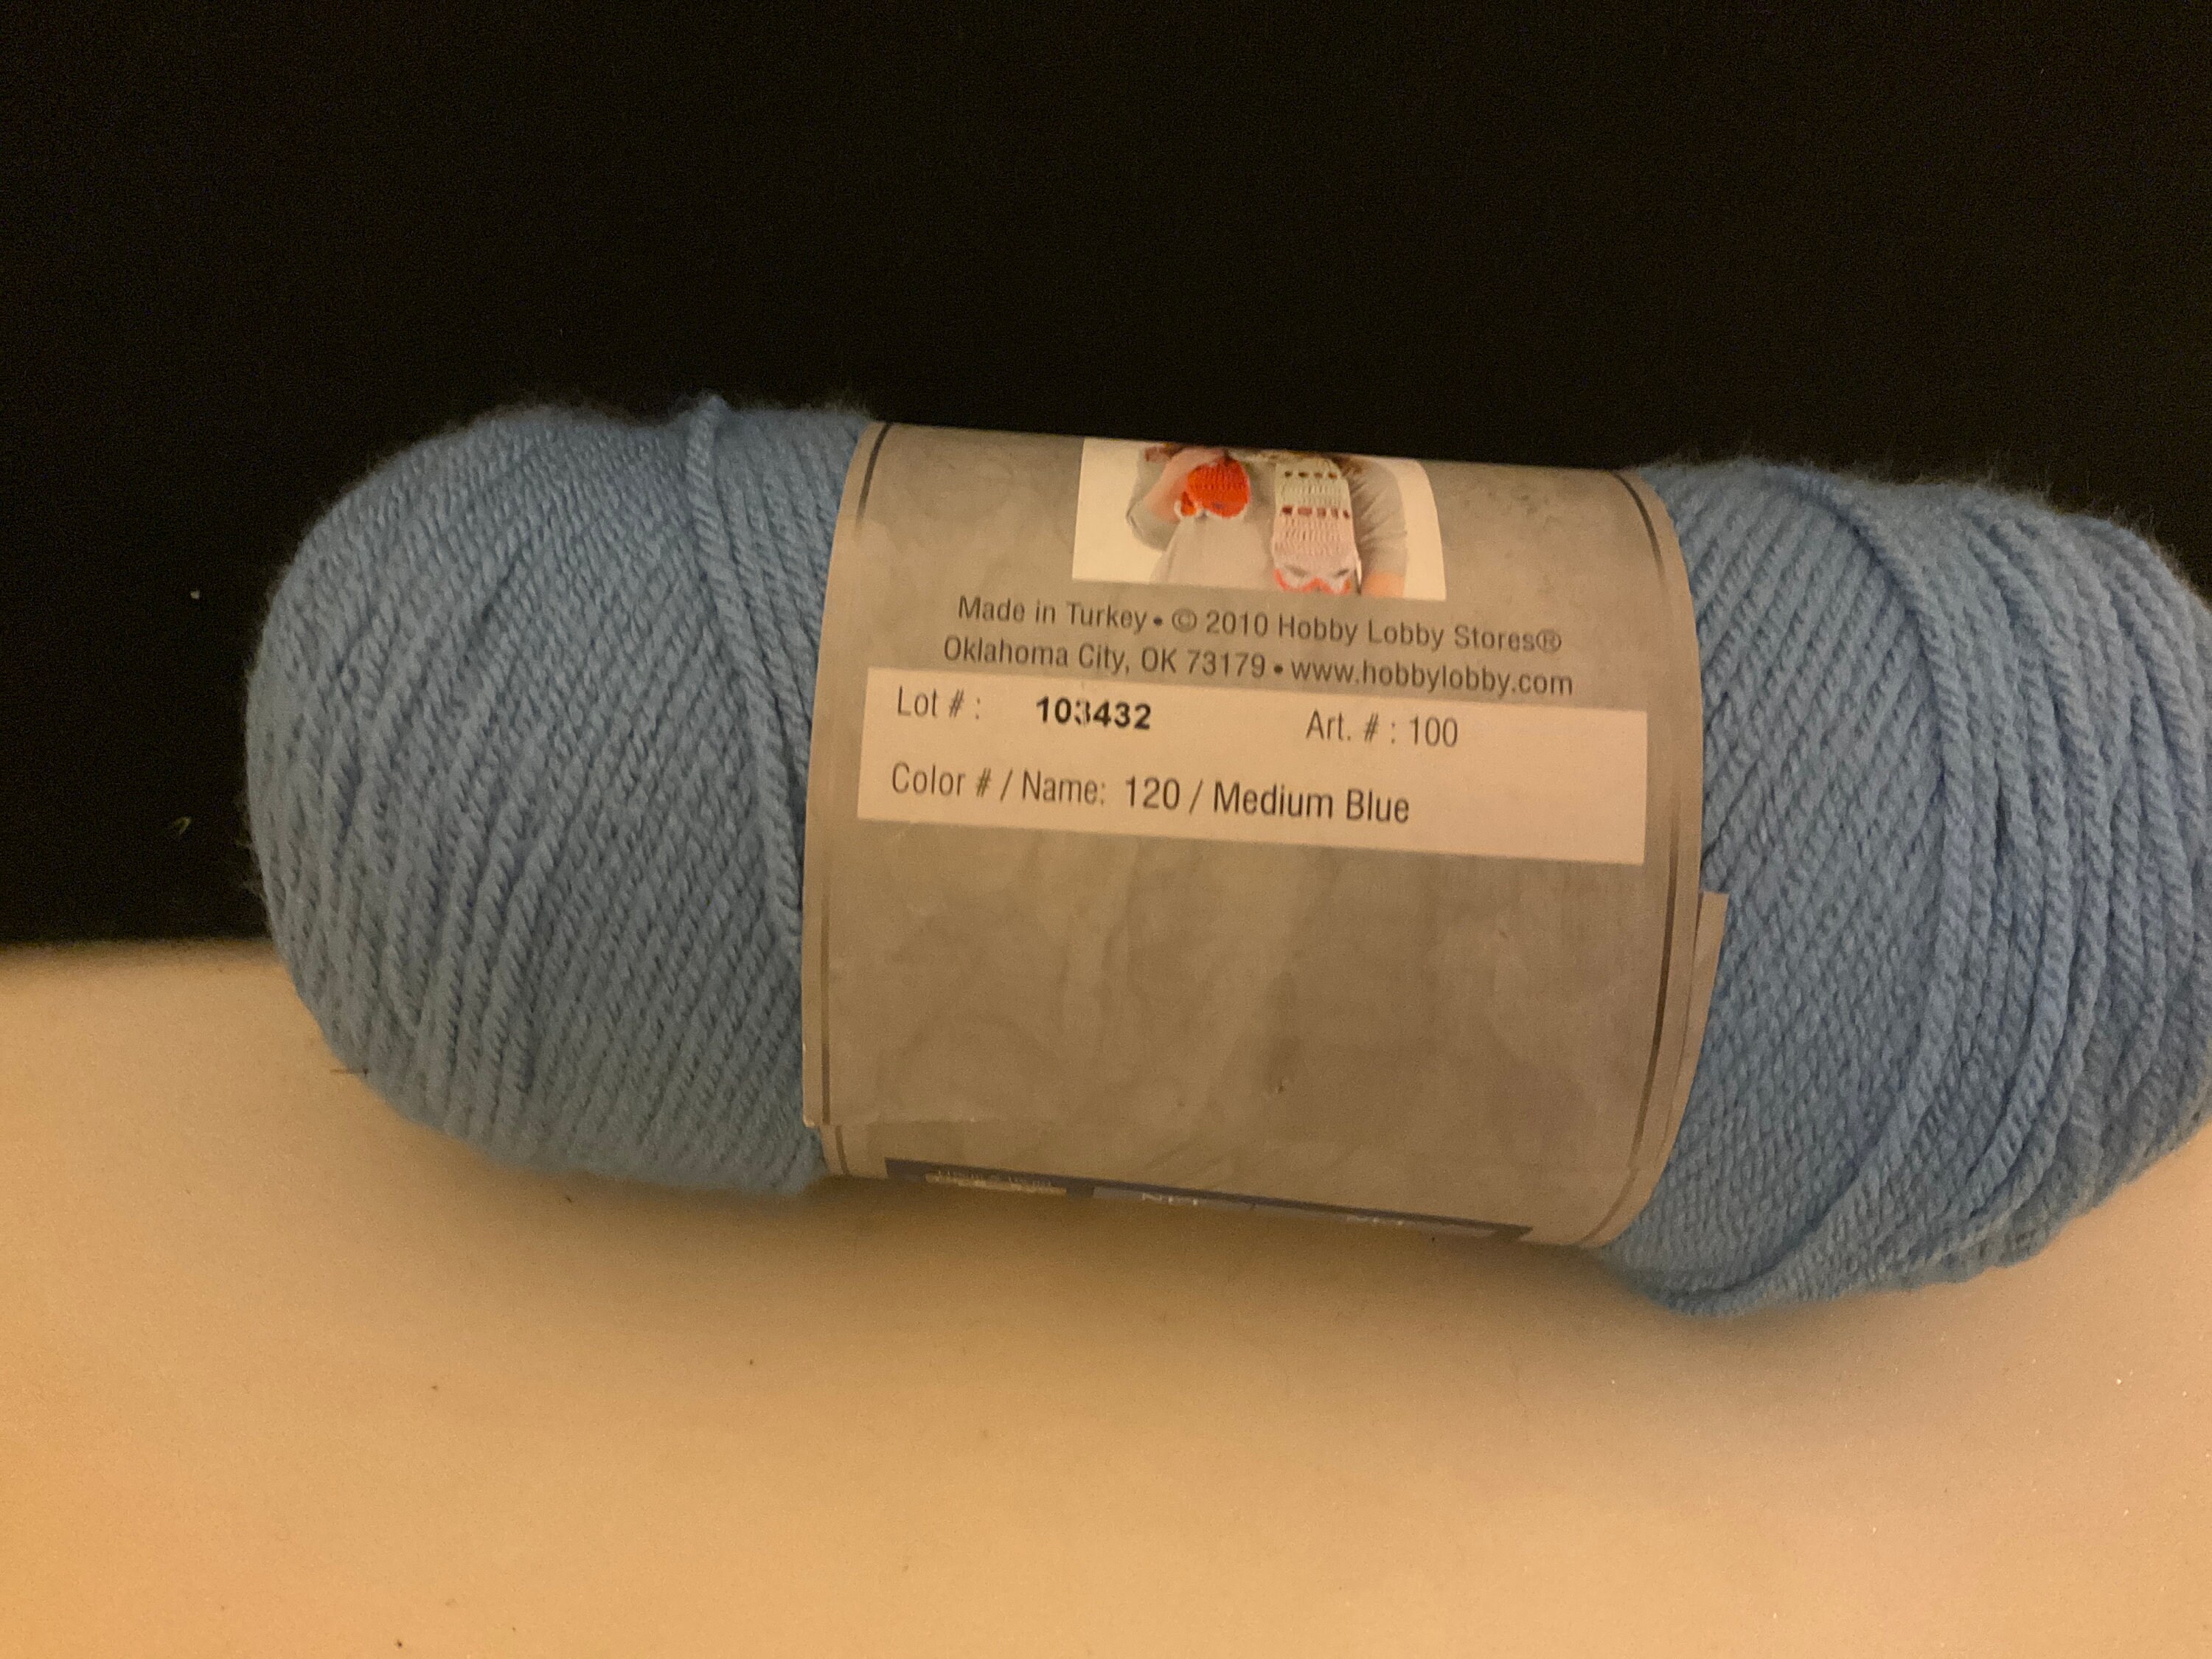 1 Yarn Bee Stitch 101 50/50 Color Aquamarine 